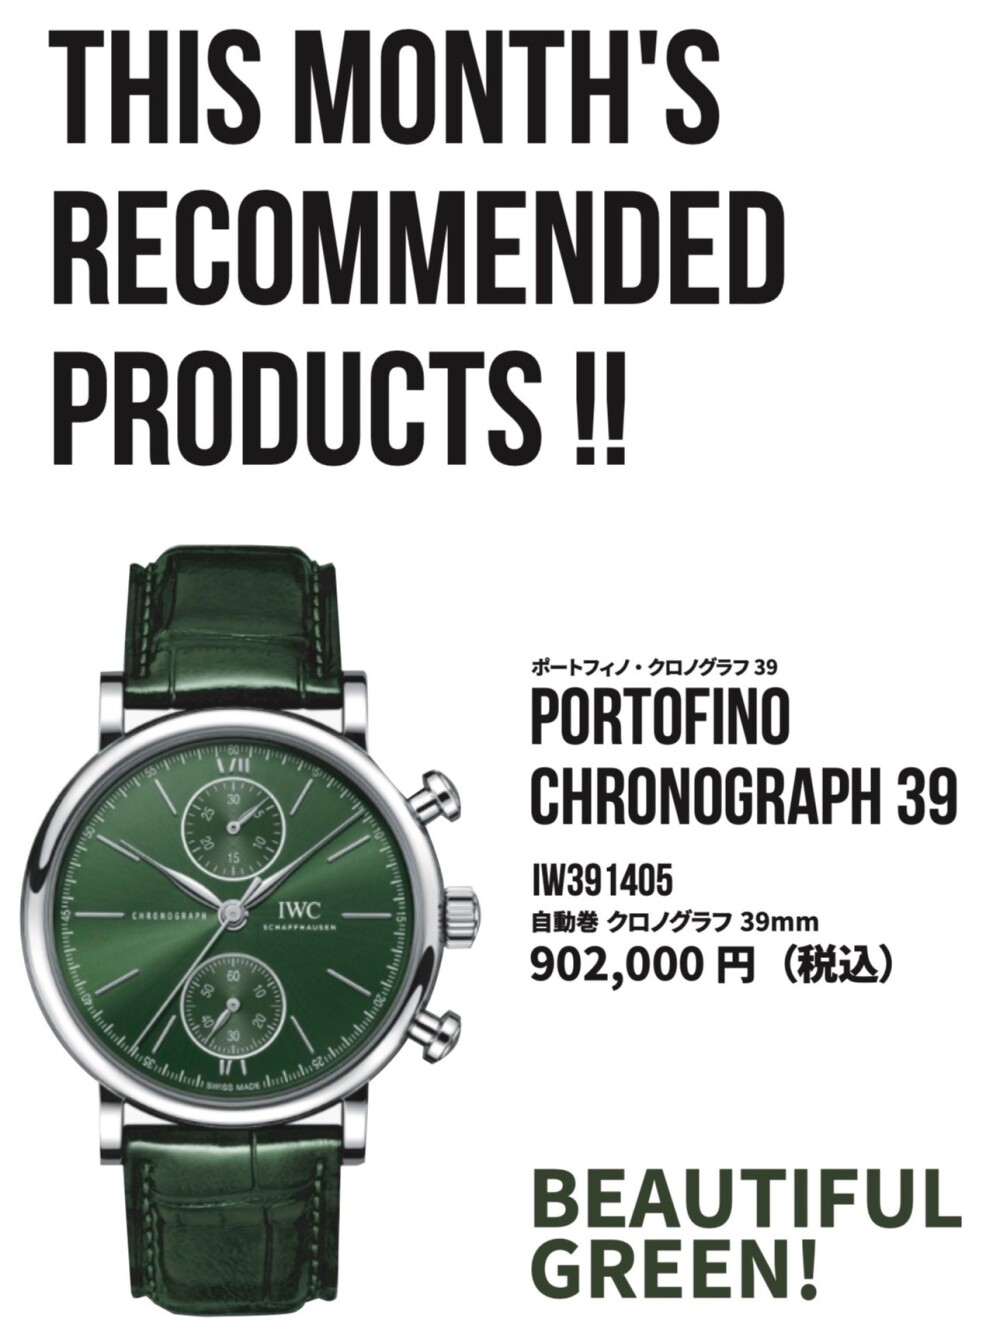 IWC PORTFINO CHRONOGRAPH 39 GREEN DIAL